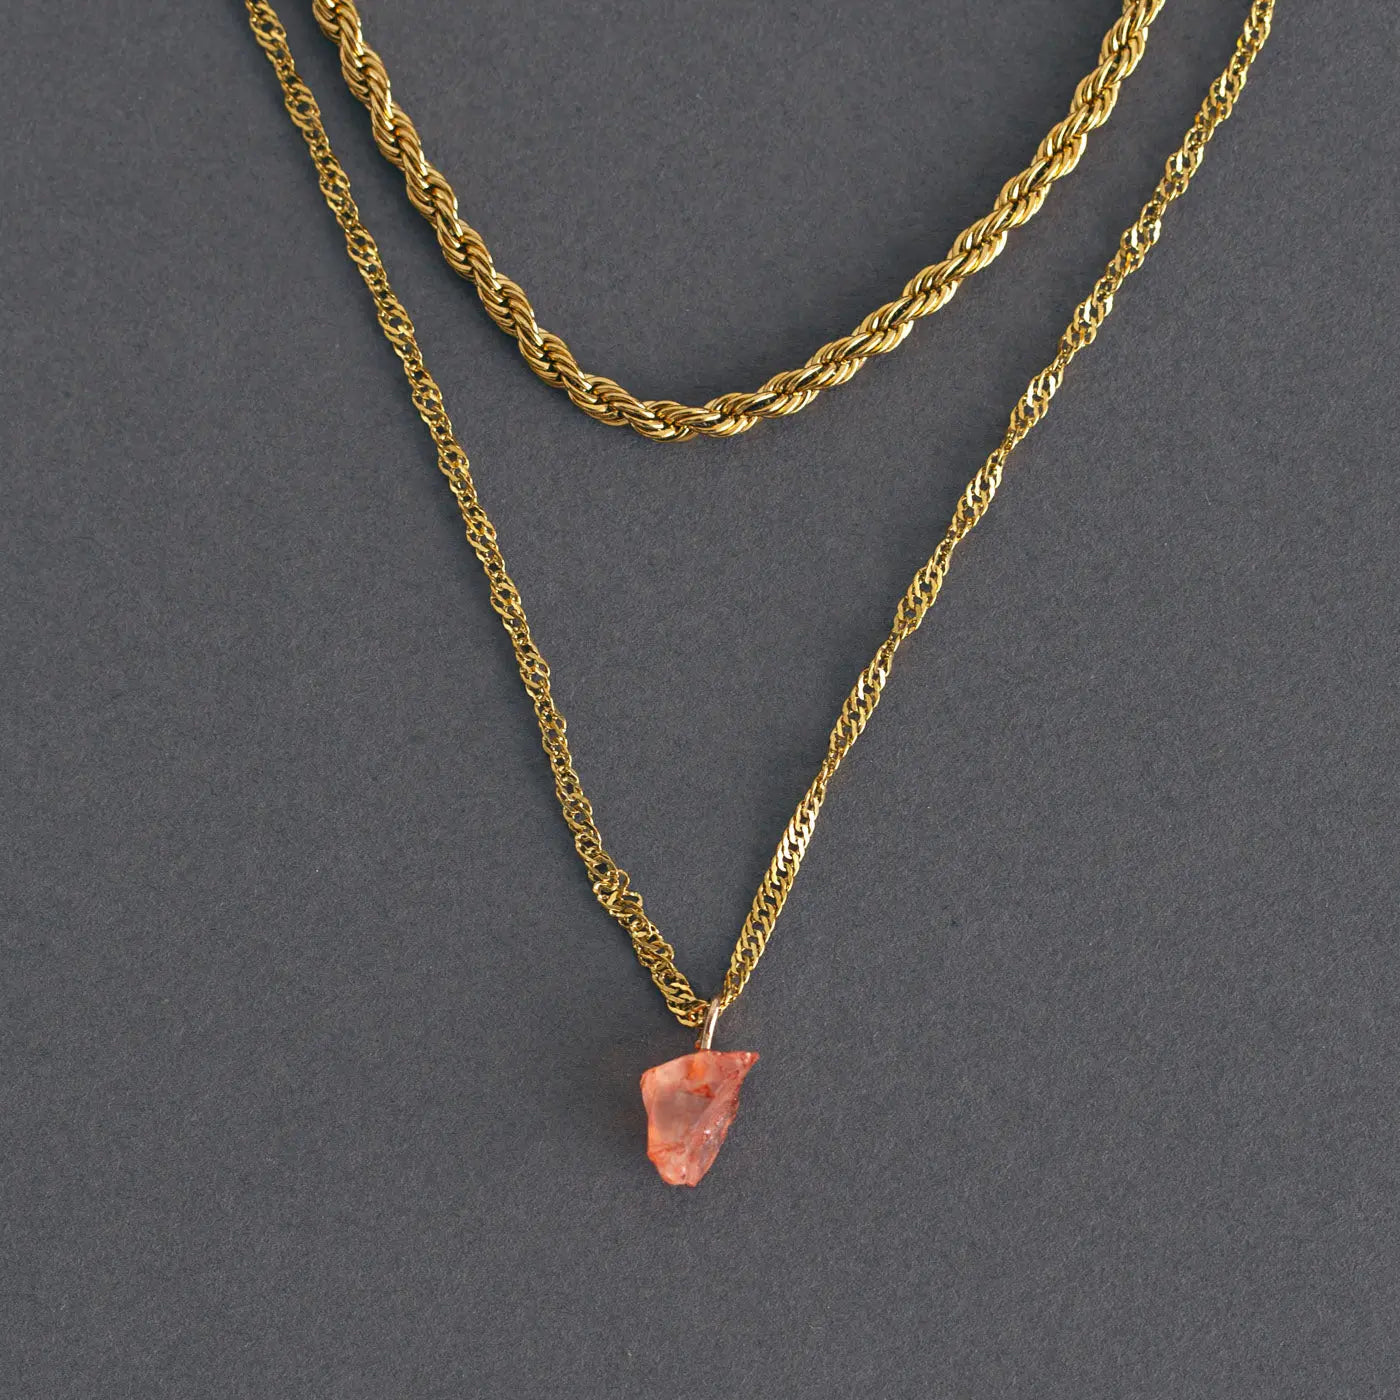 Isolde - Carnelian Necklace